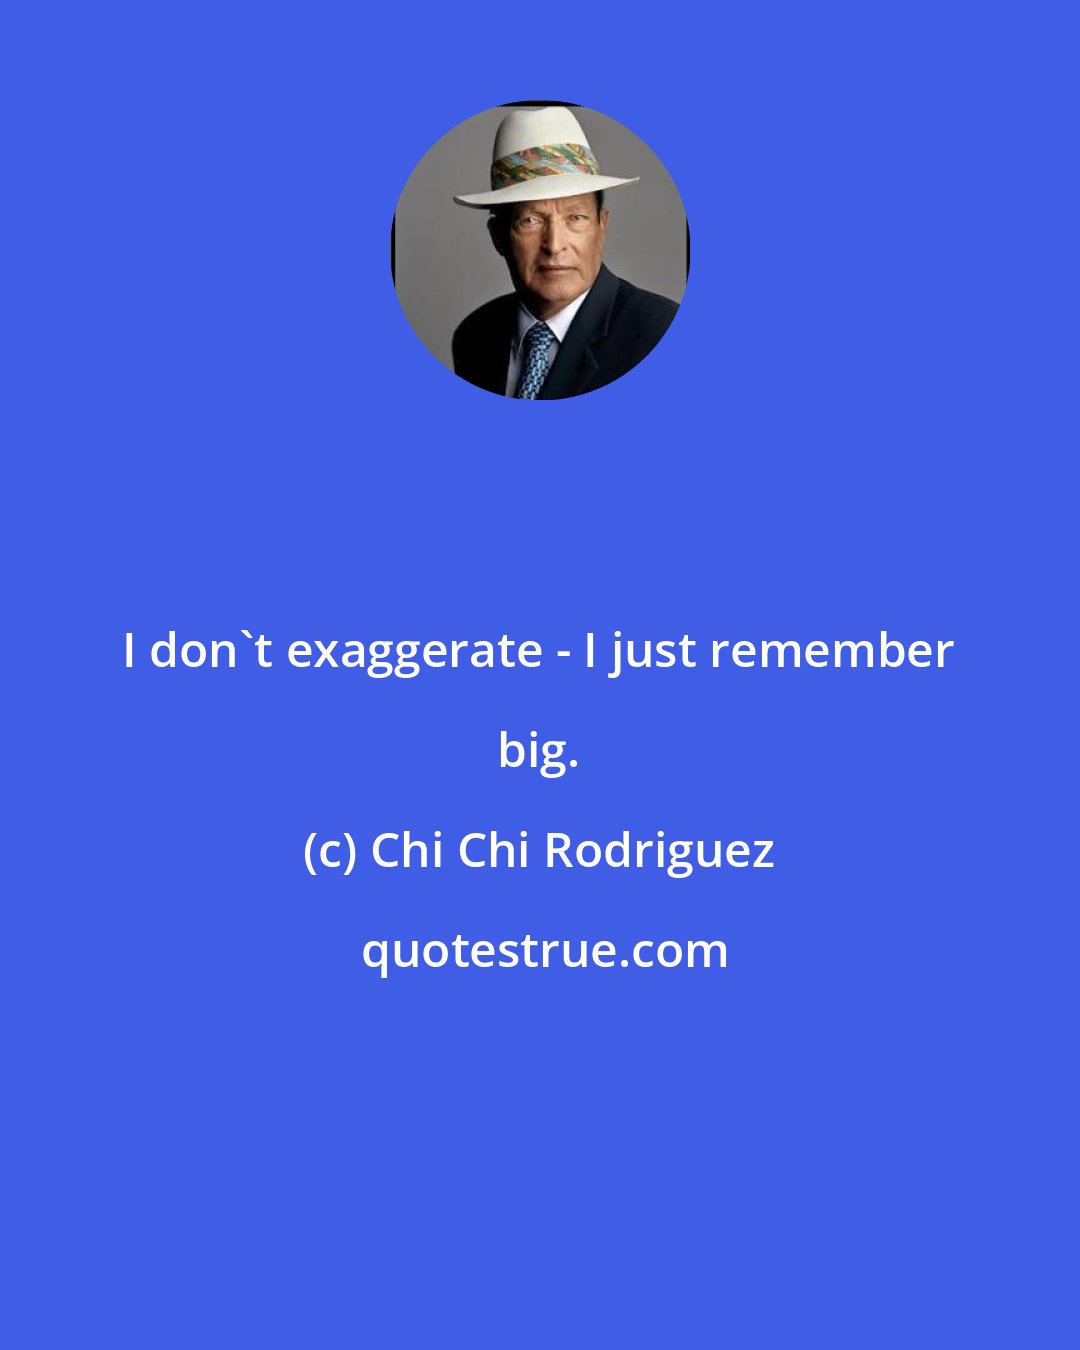 Chi Chi Rodriguez: I don't exaggerate - I just remember big.